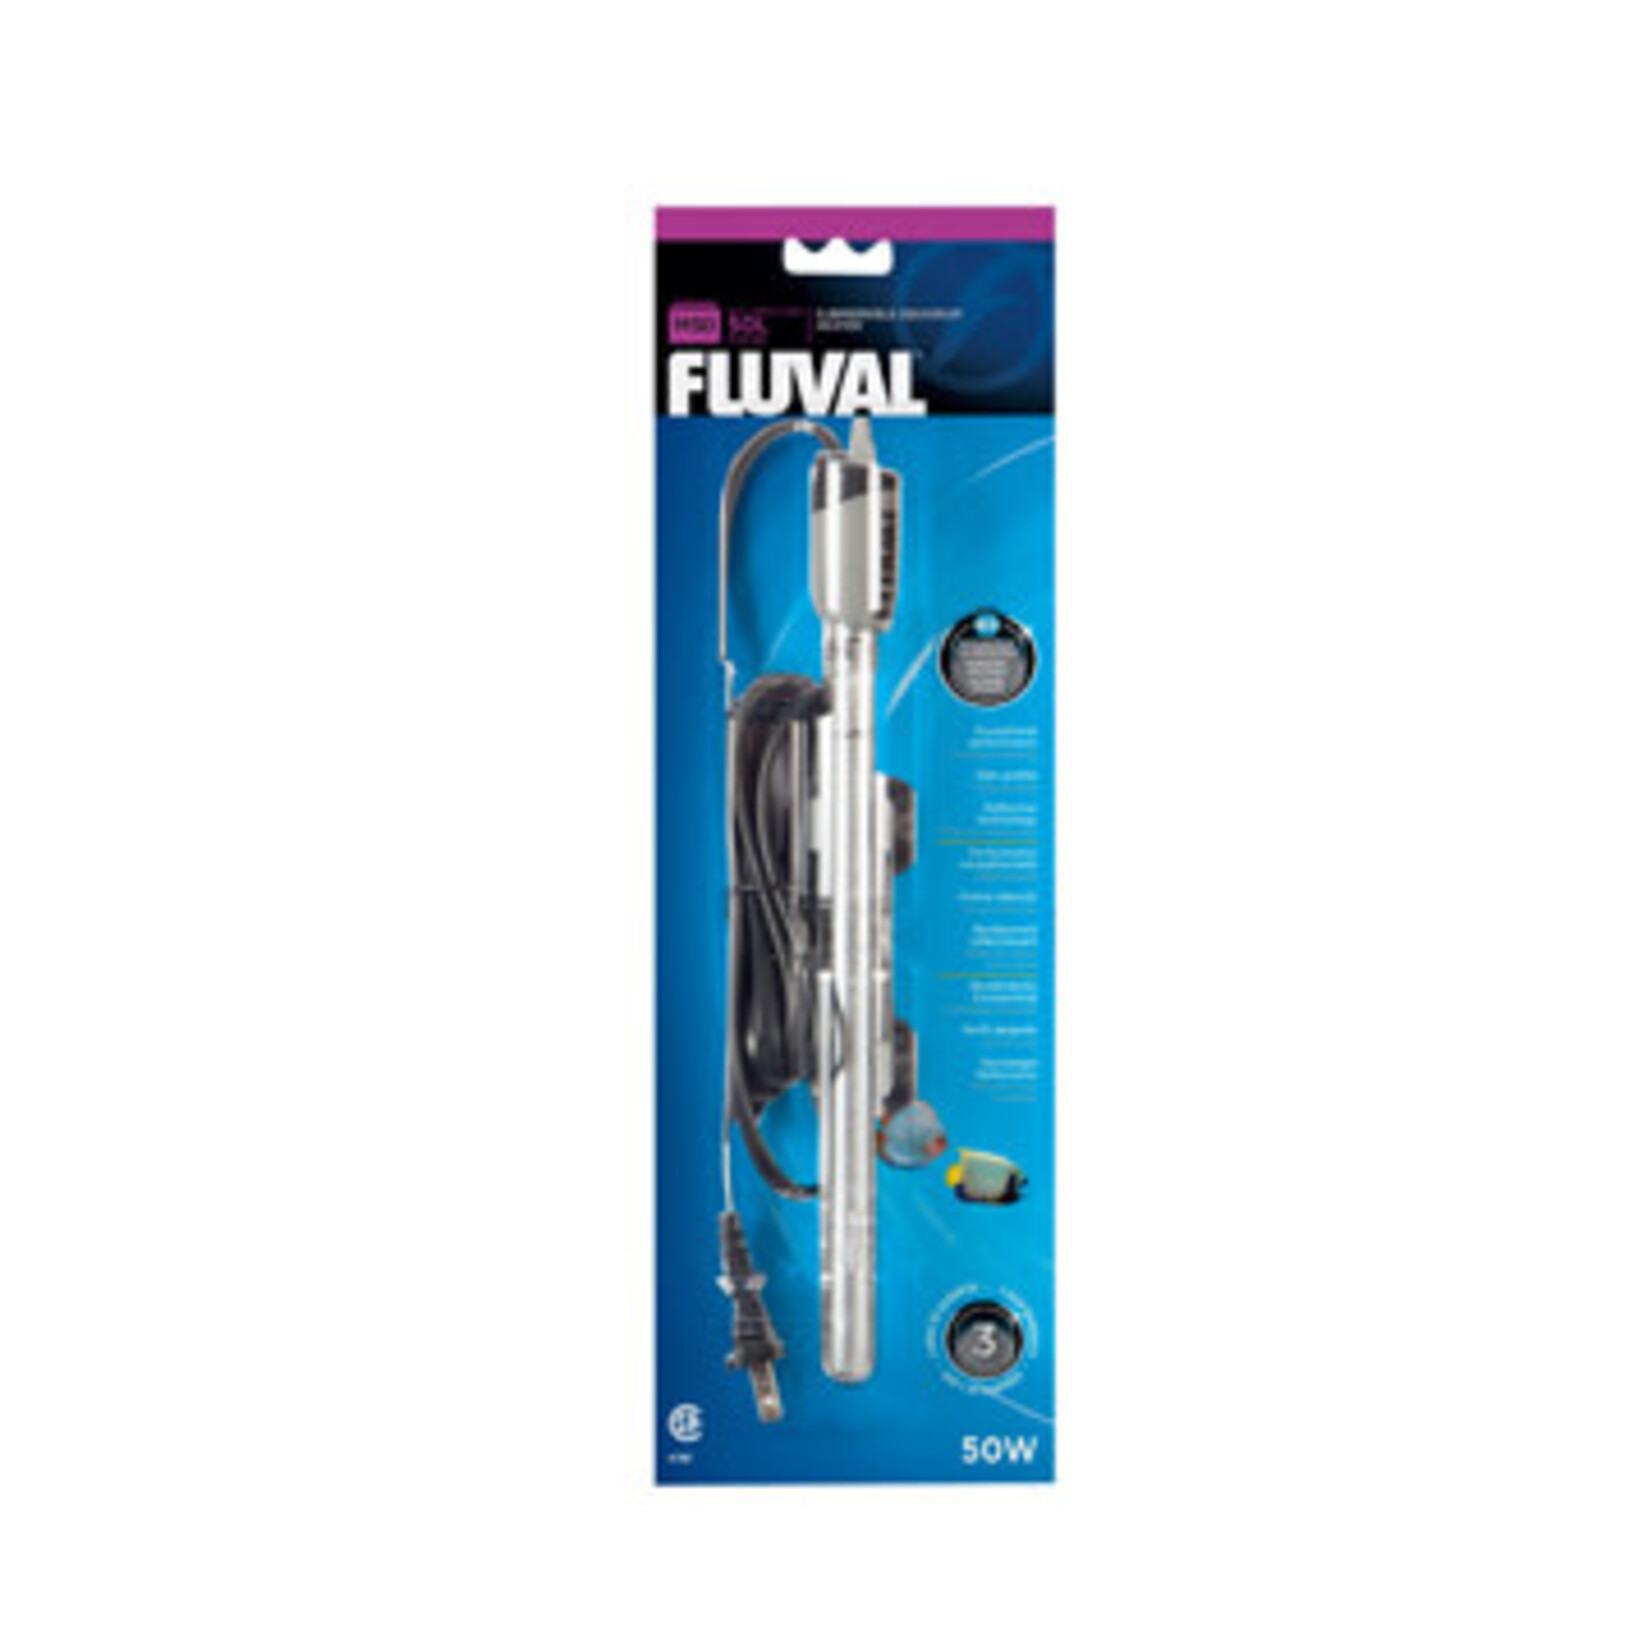 Fluval Fluval M 50 watt heater (15US Gal)